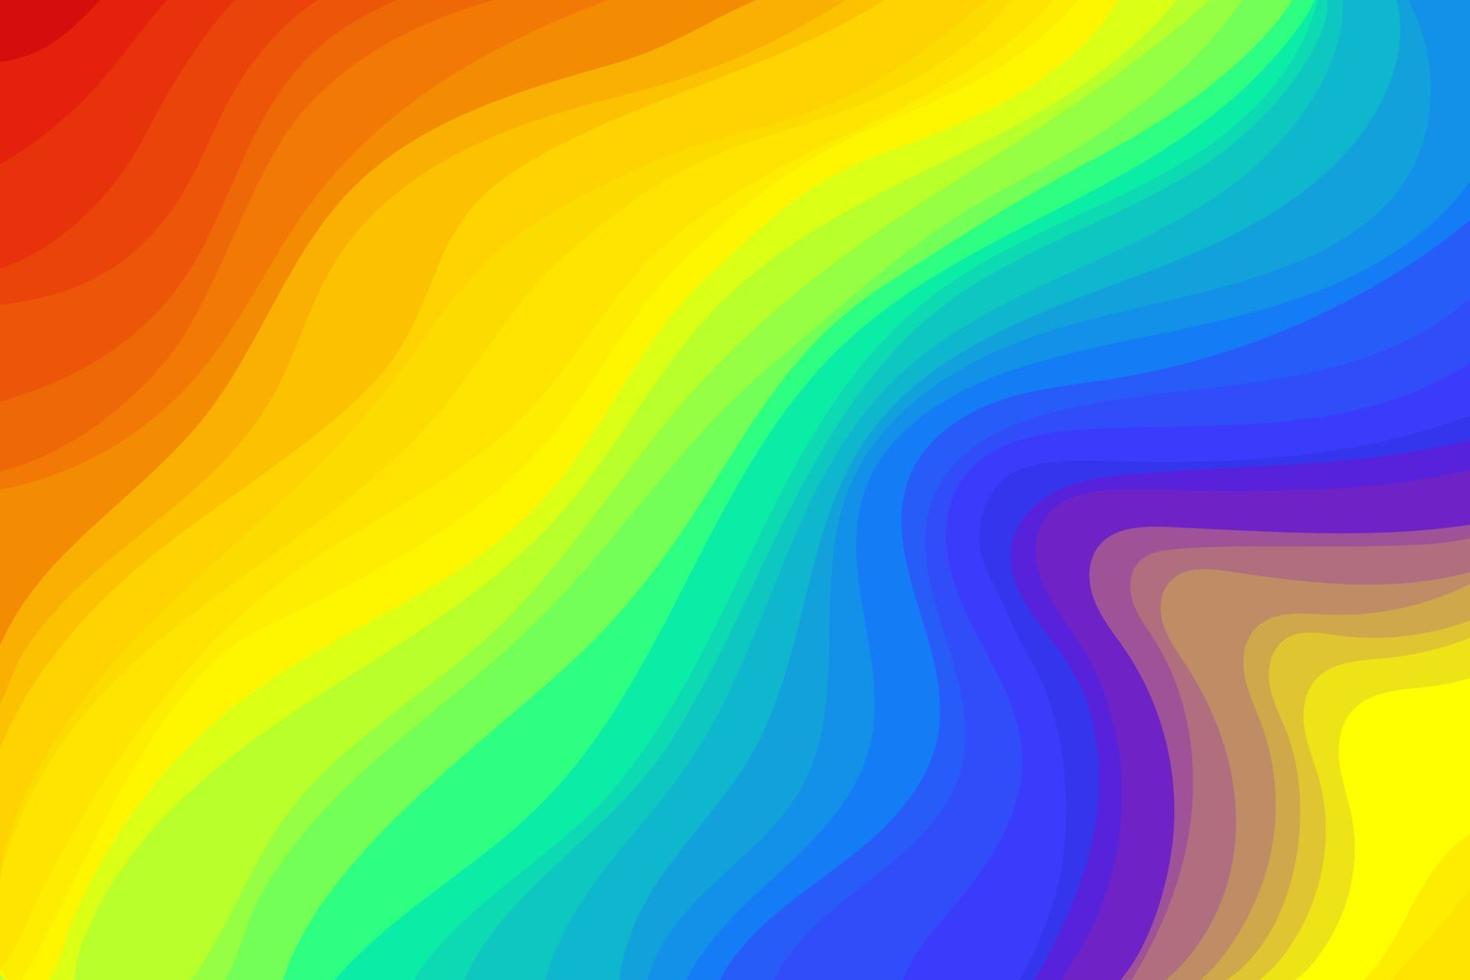 Rainbow Wave Background vector